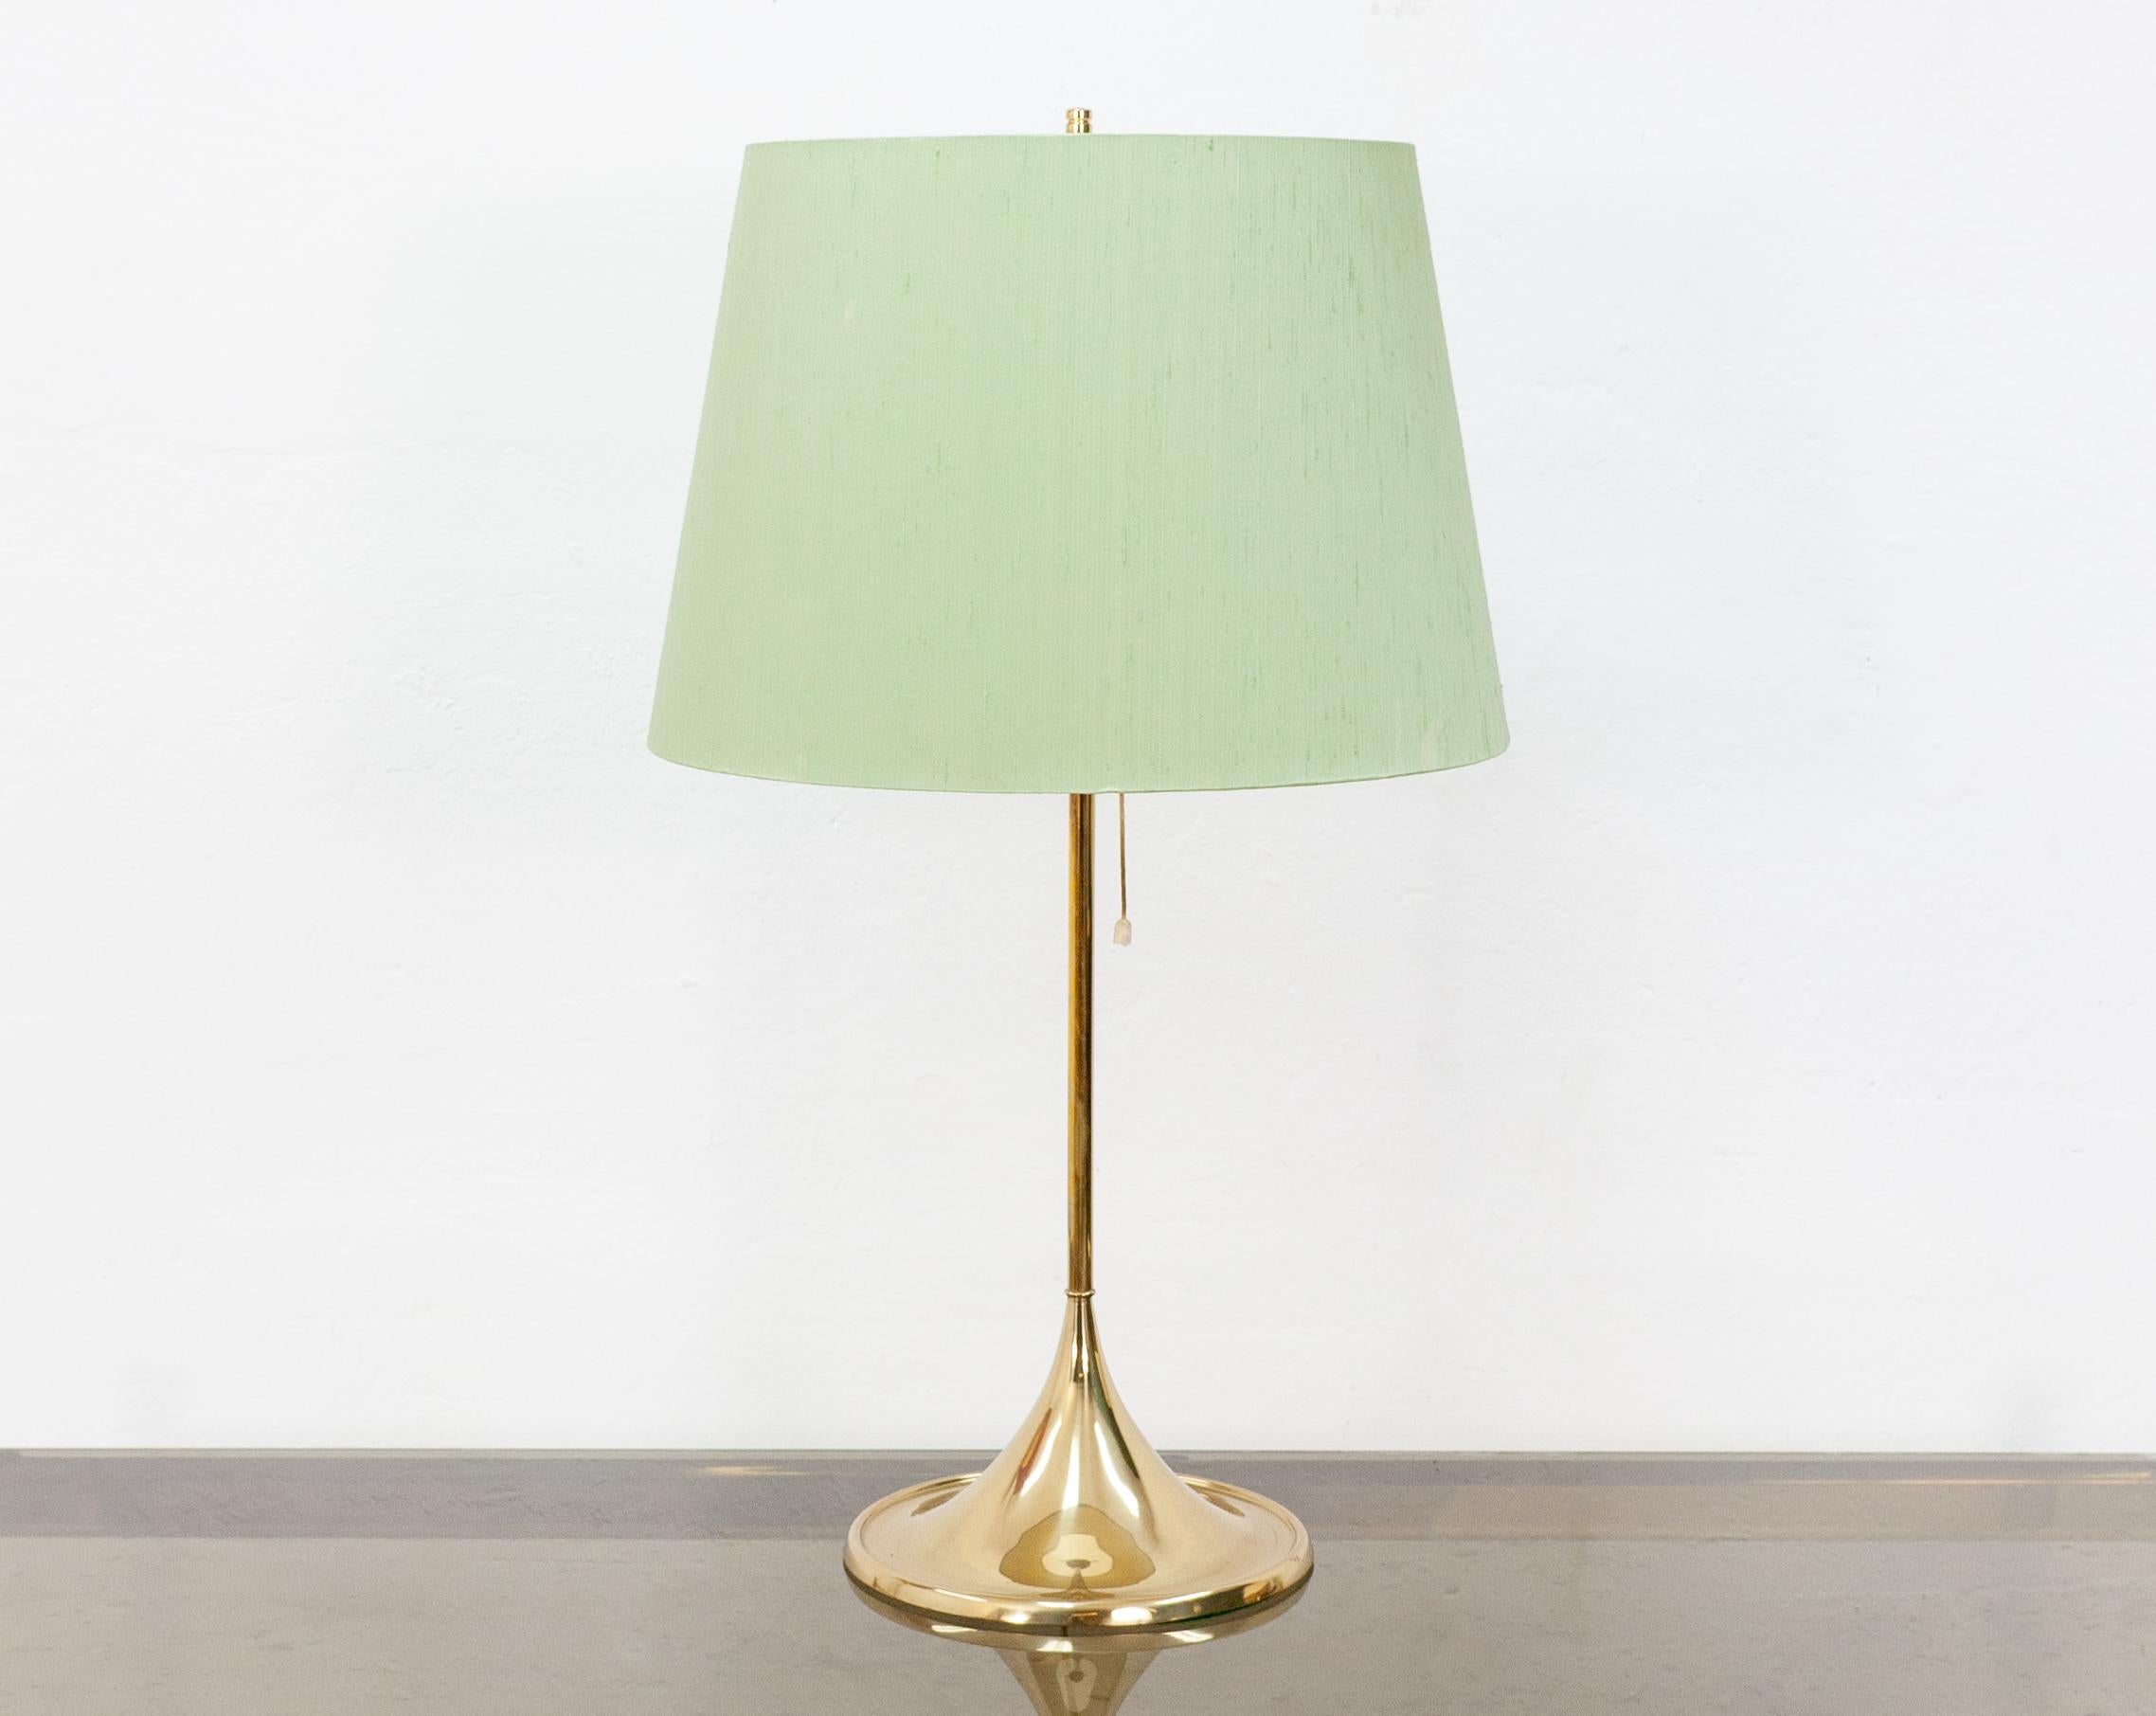 Bergbom B-024 Table Lamp with Green Shade, 1960s 3